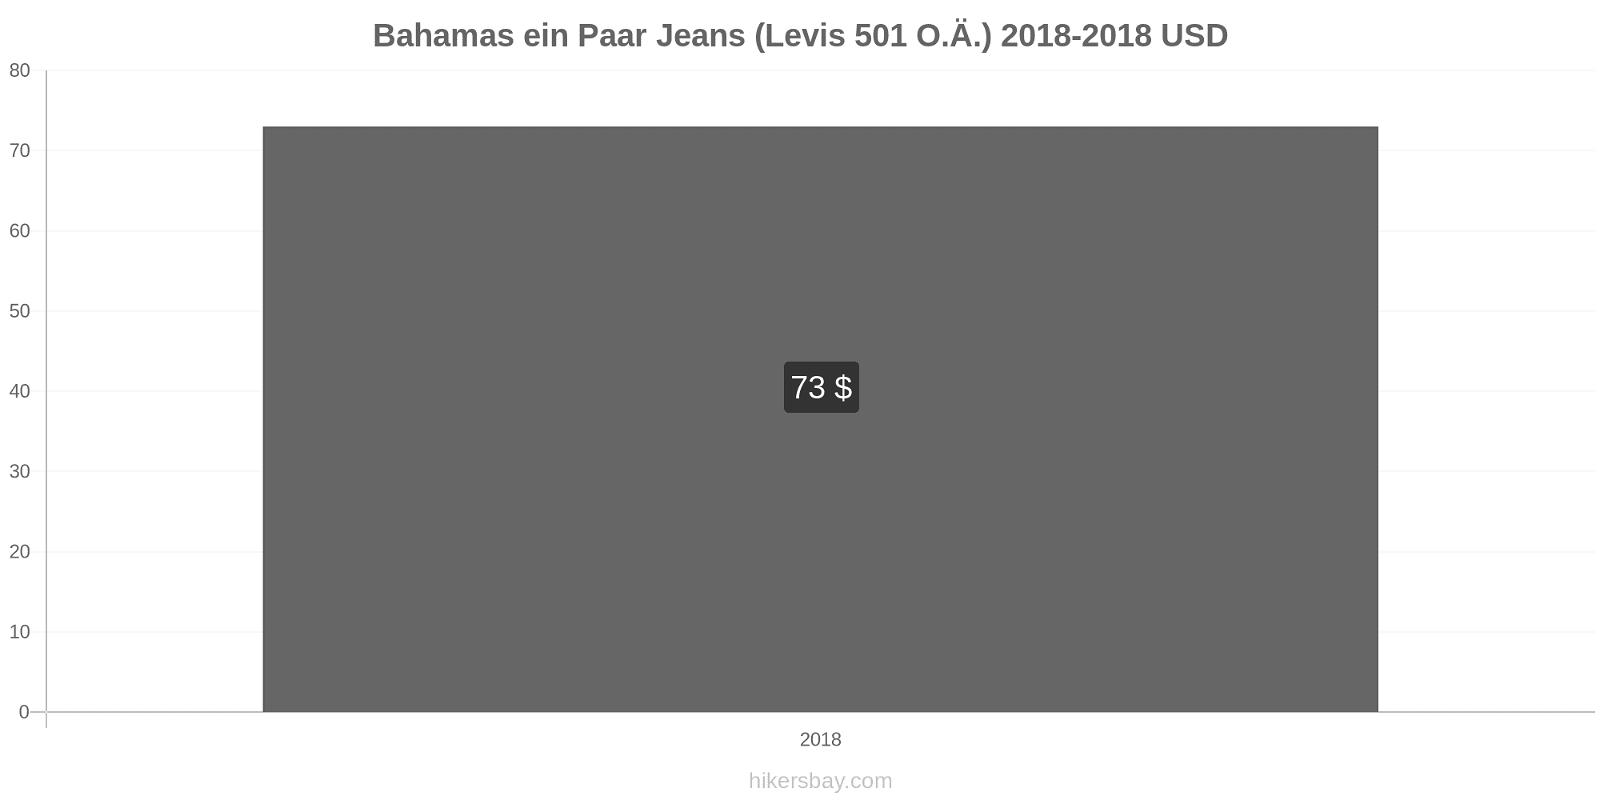 Bahamas Preisänderungen 1 Paar Jeans (Levis 501 oder ähnlich) hikersbay.com